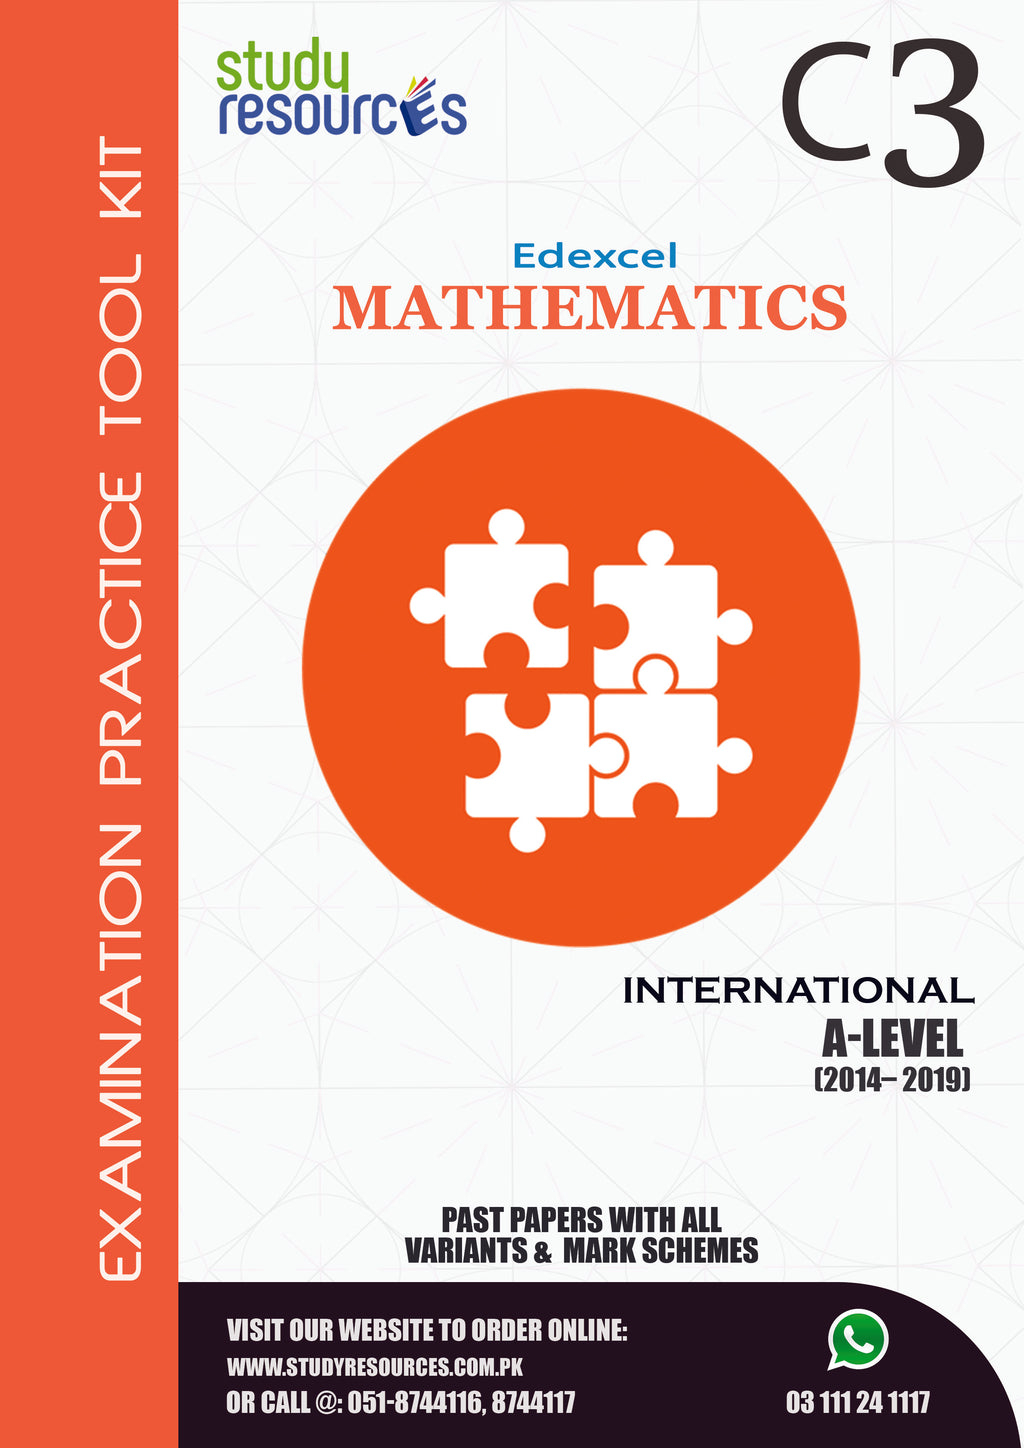 Edexcel A-Level Mathematics C-3 Past Papers (2014-2019)